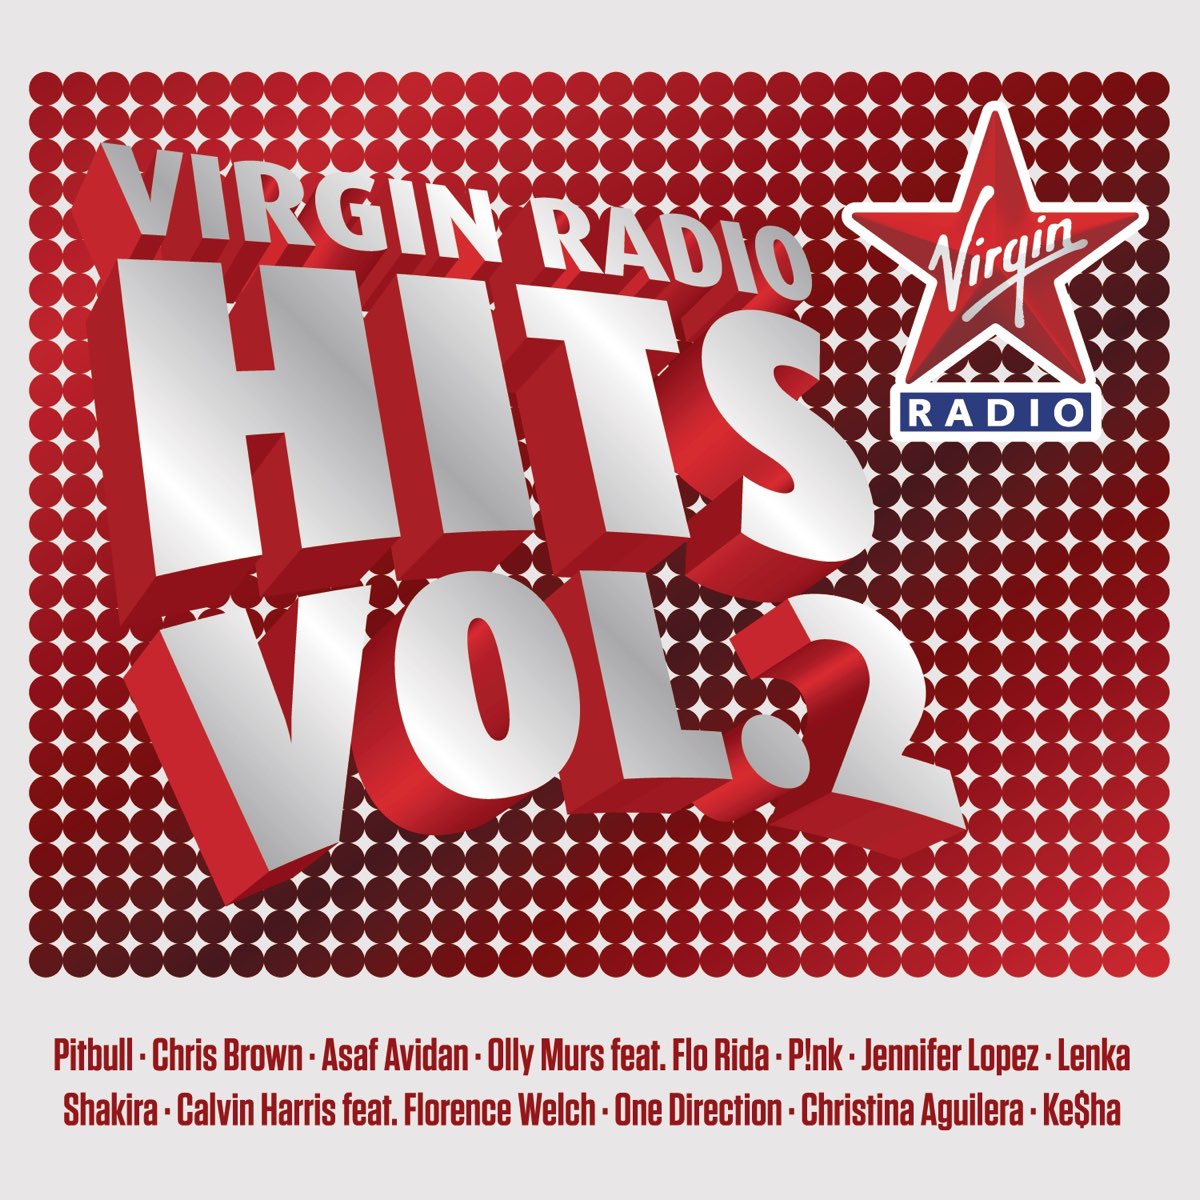 Virgin Radio Hits, Vol. 2 - Album by Various Artists - Apple Music